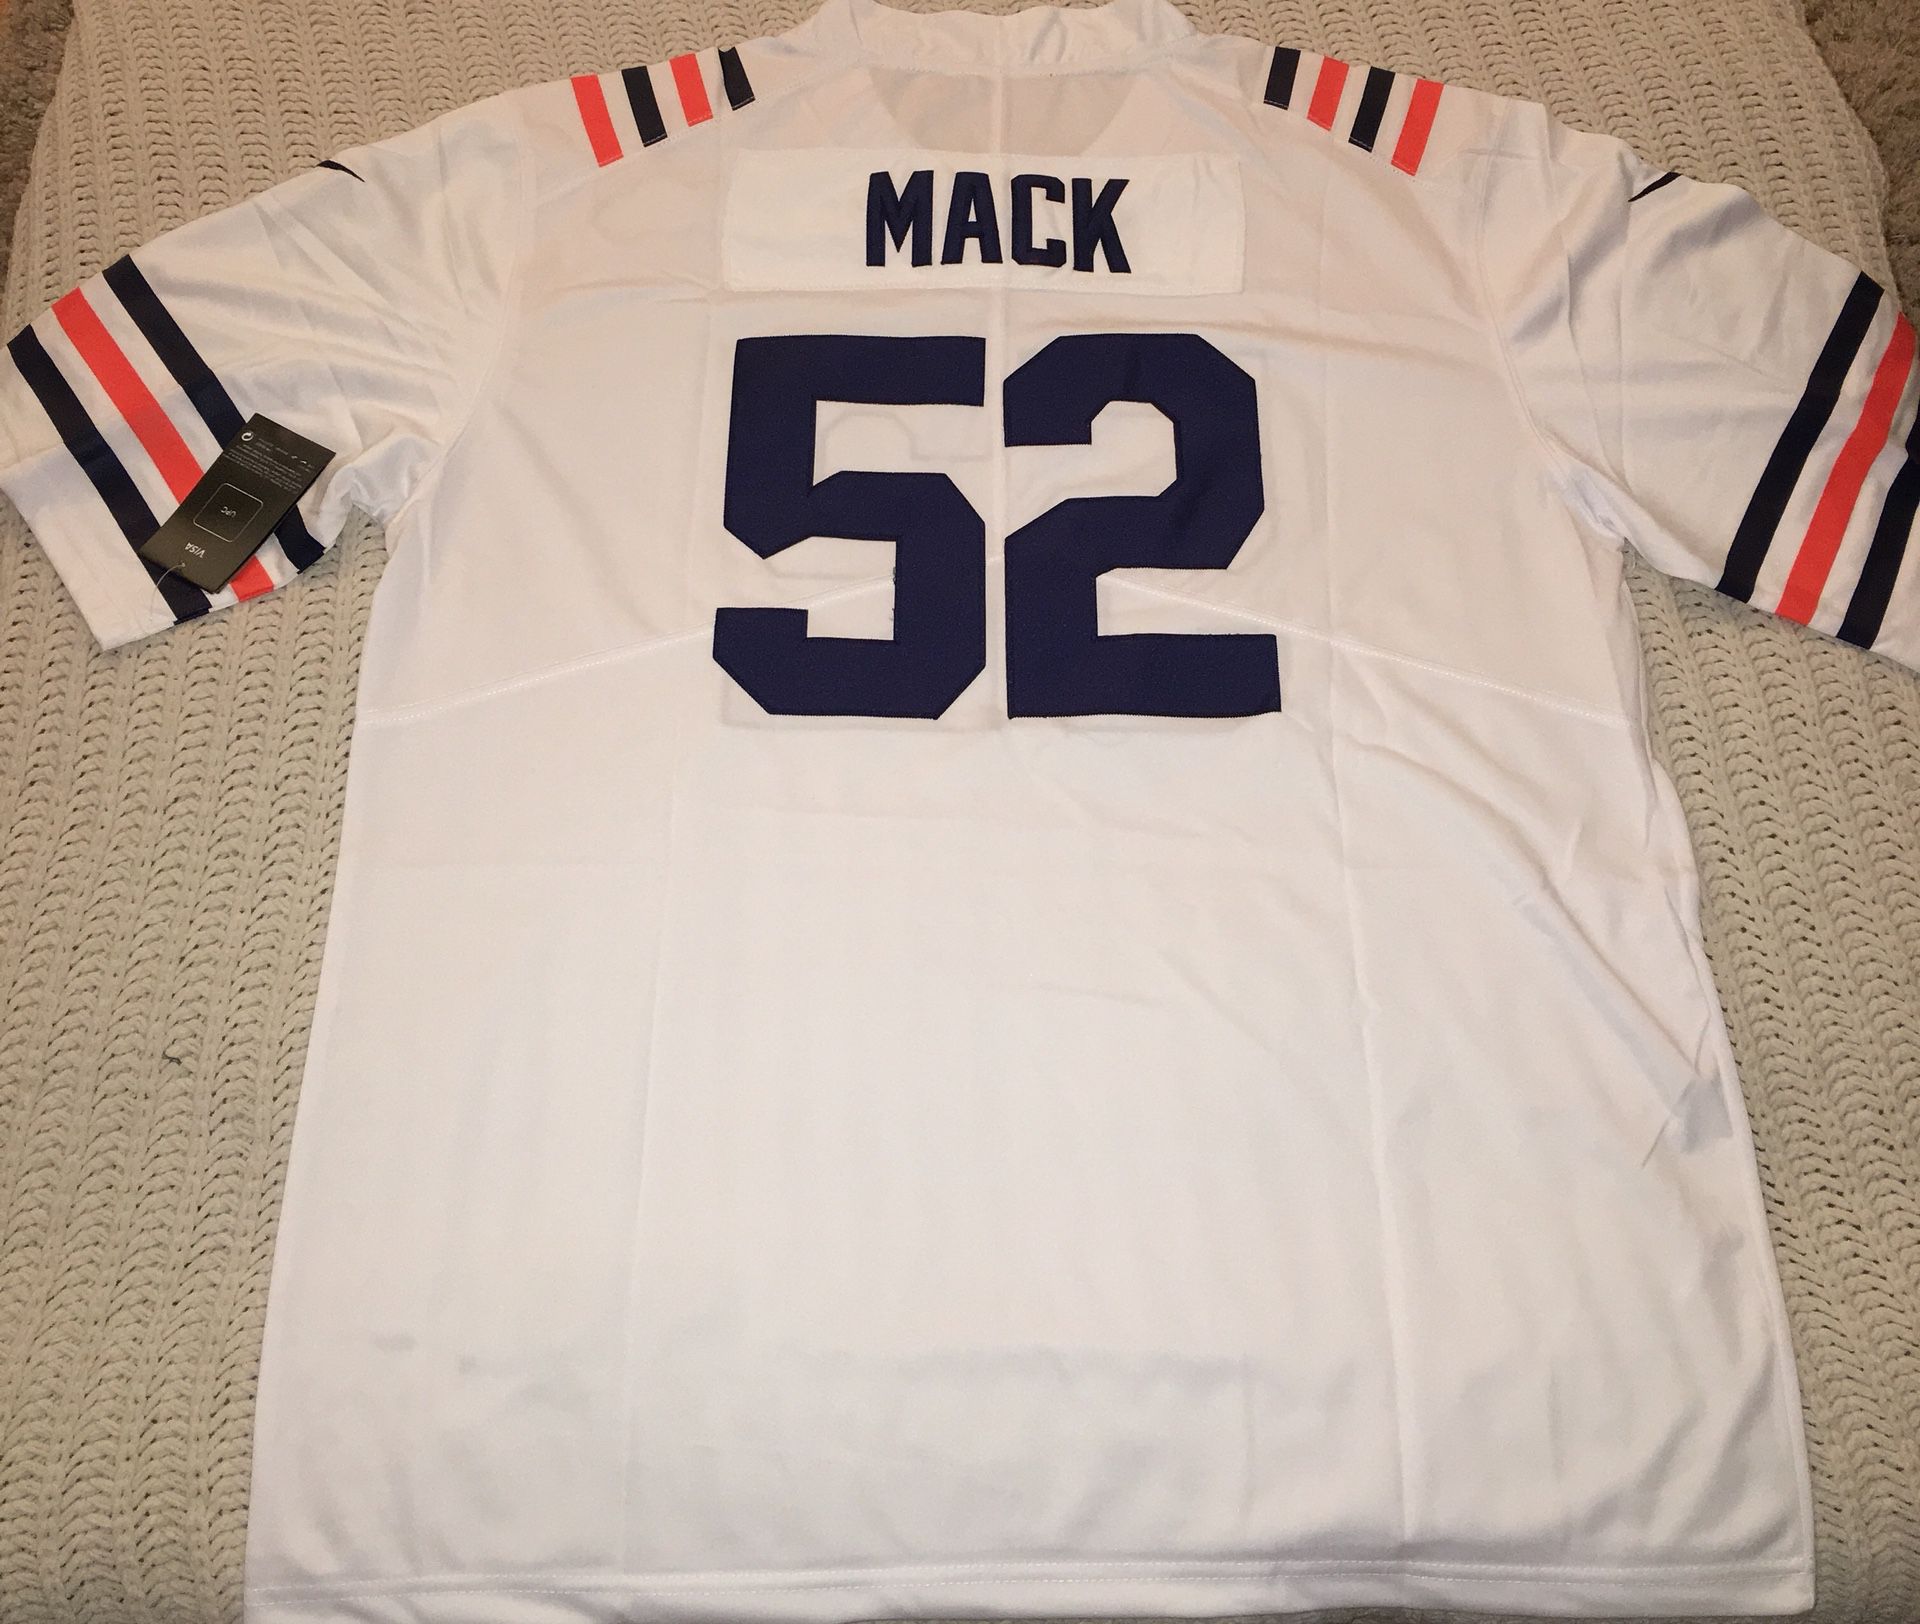 Mack bears💯edition football jersey brand new large $35